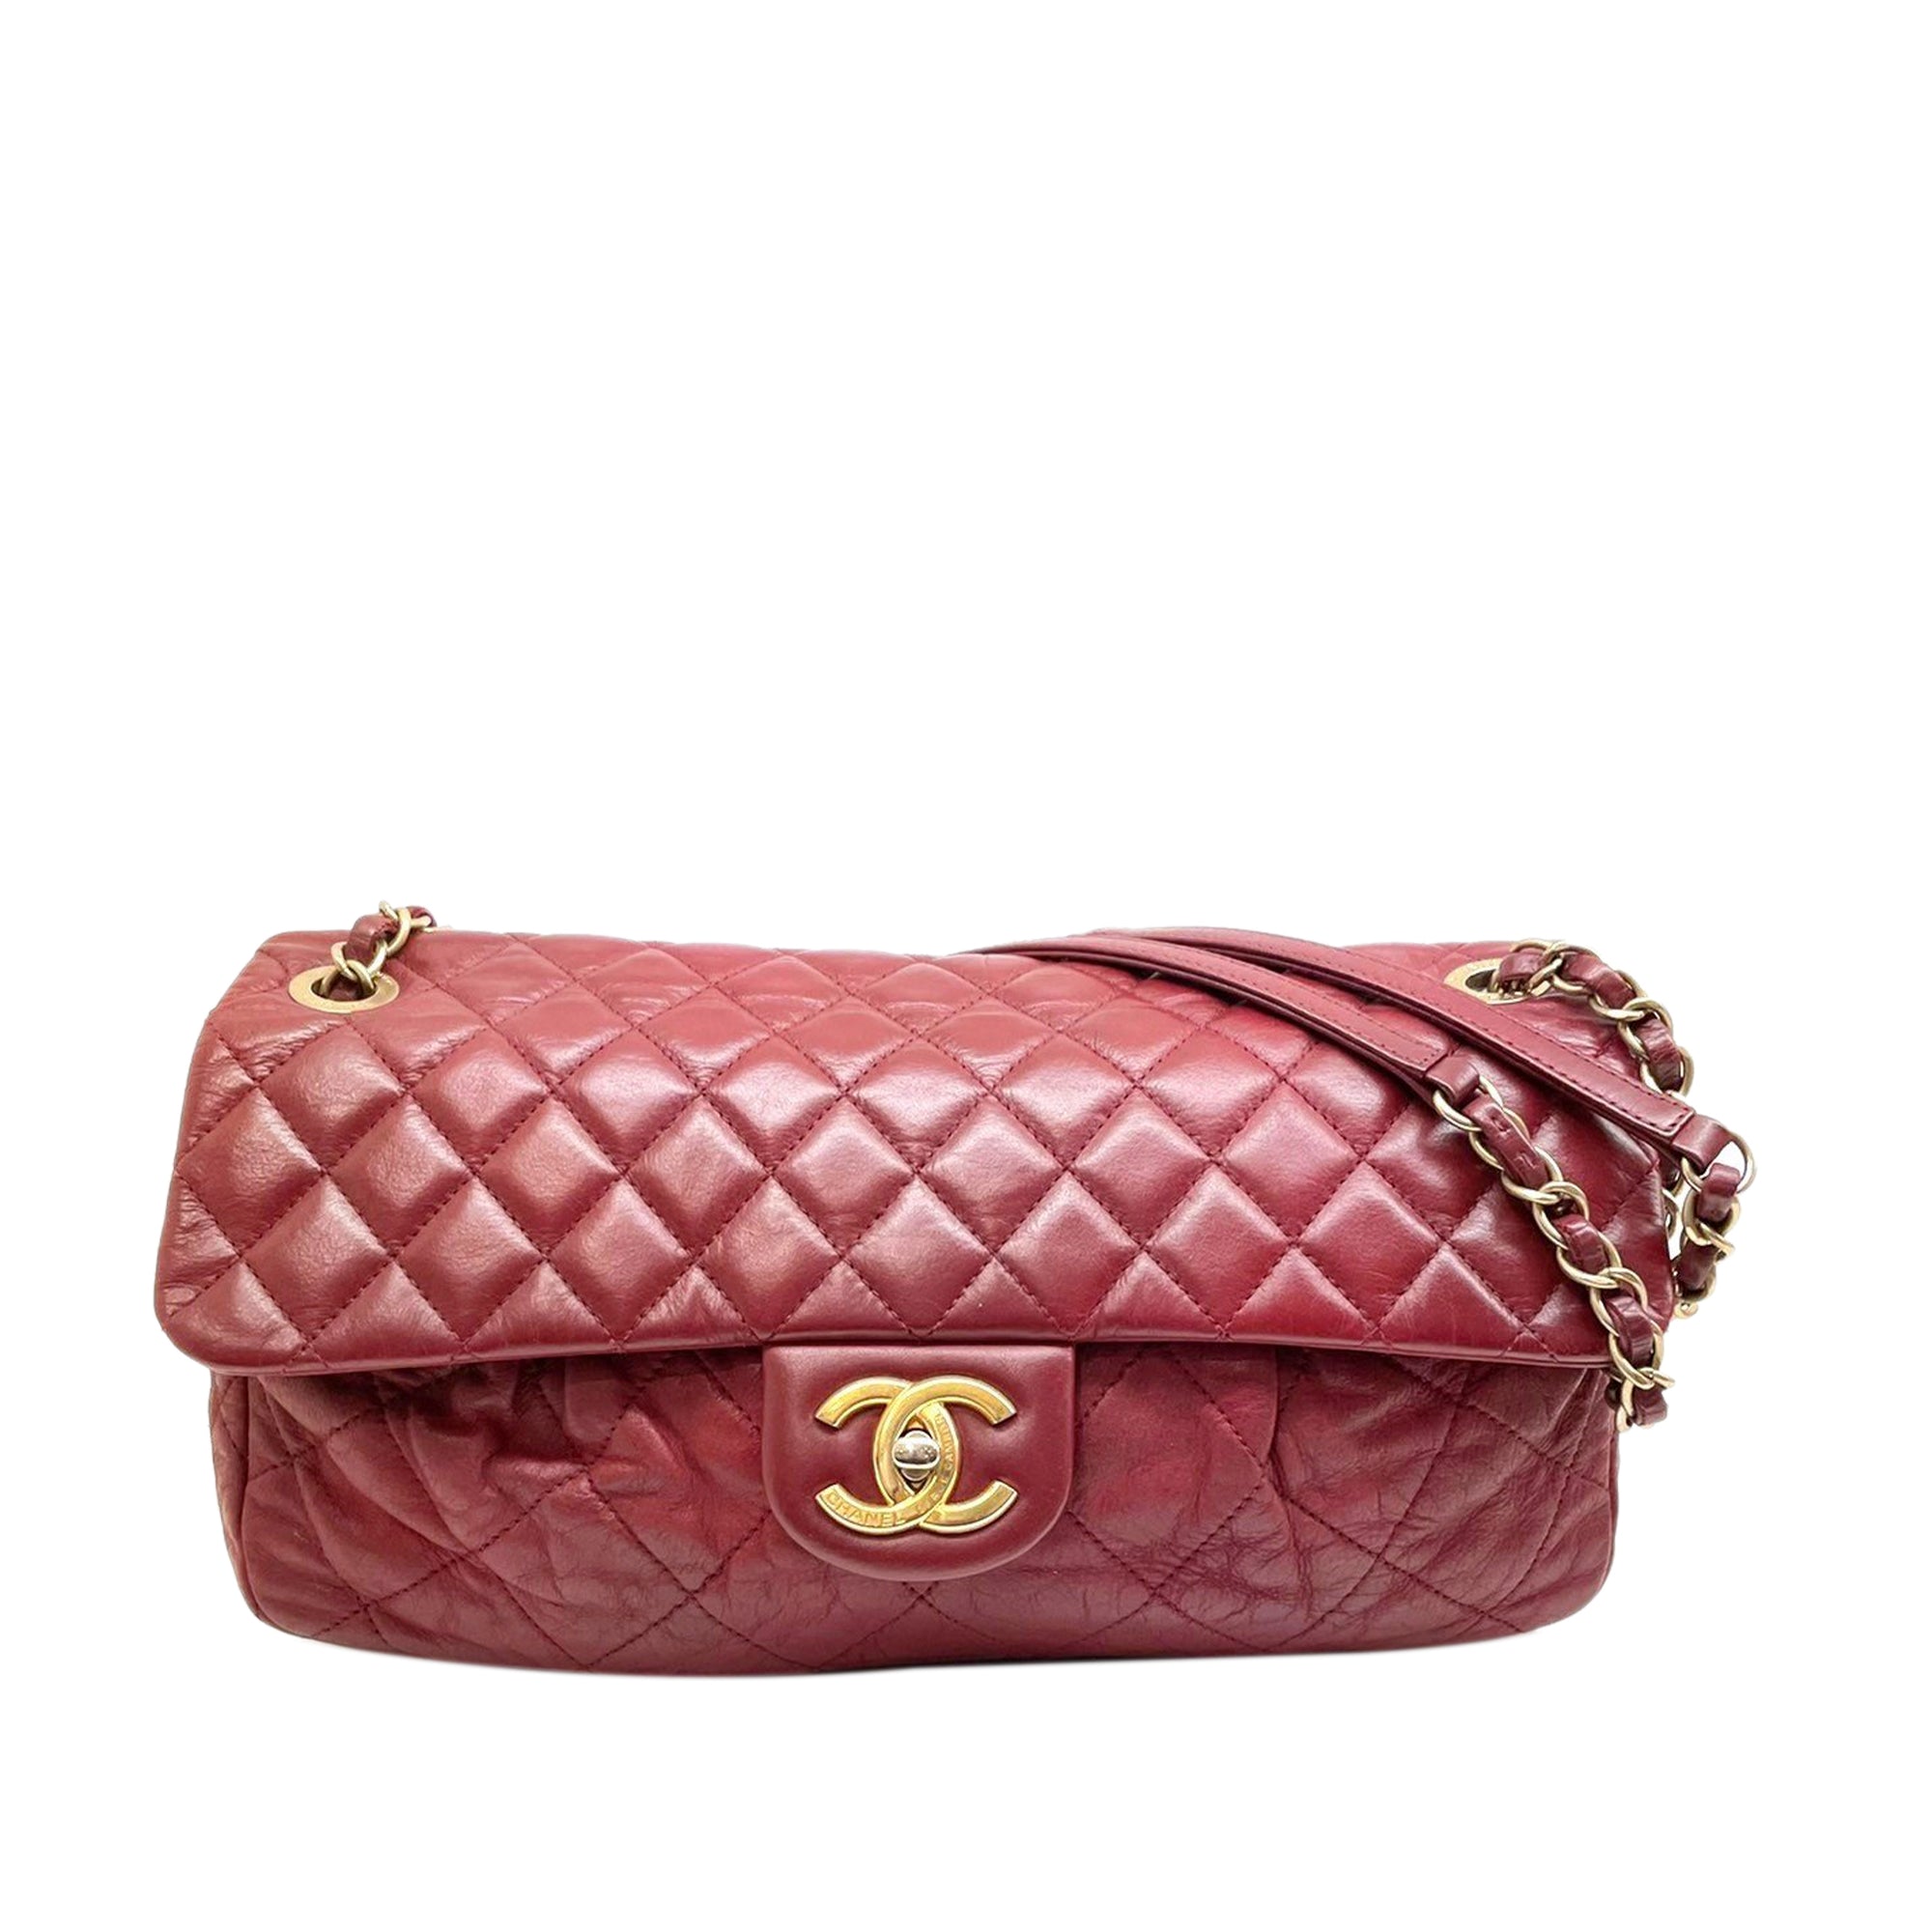 Chanel 10A Timeless Caviar Leather Shoulder Bag